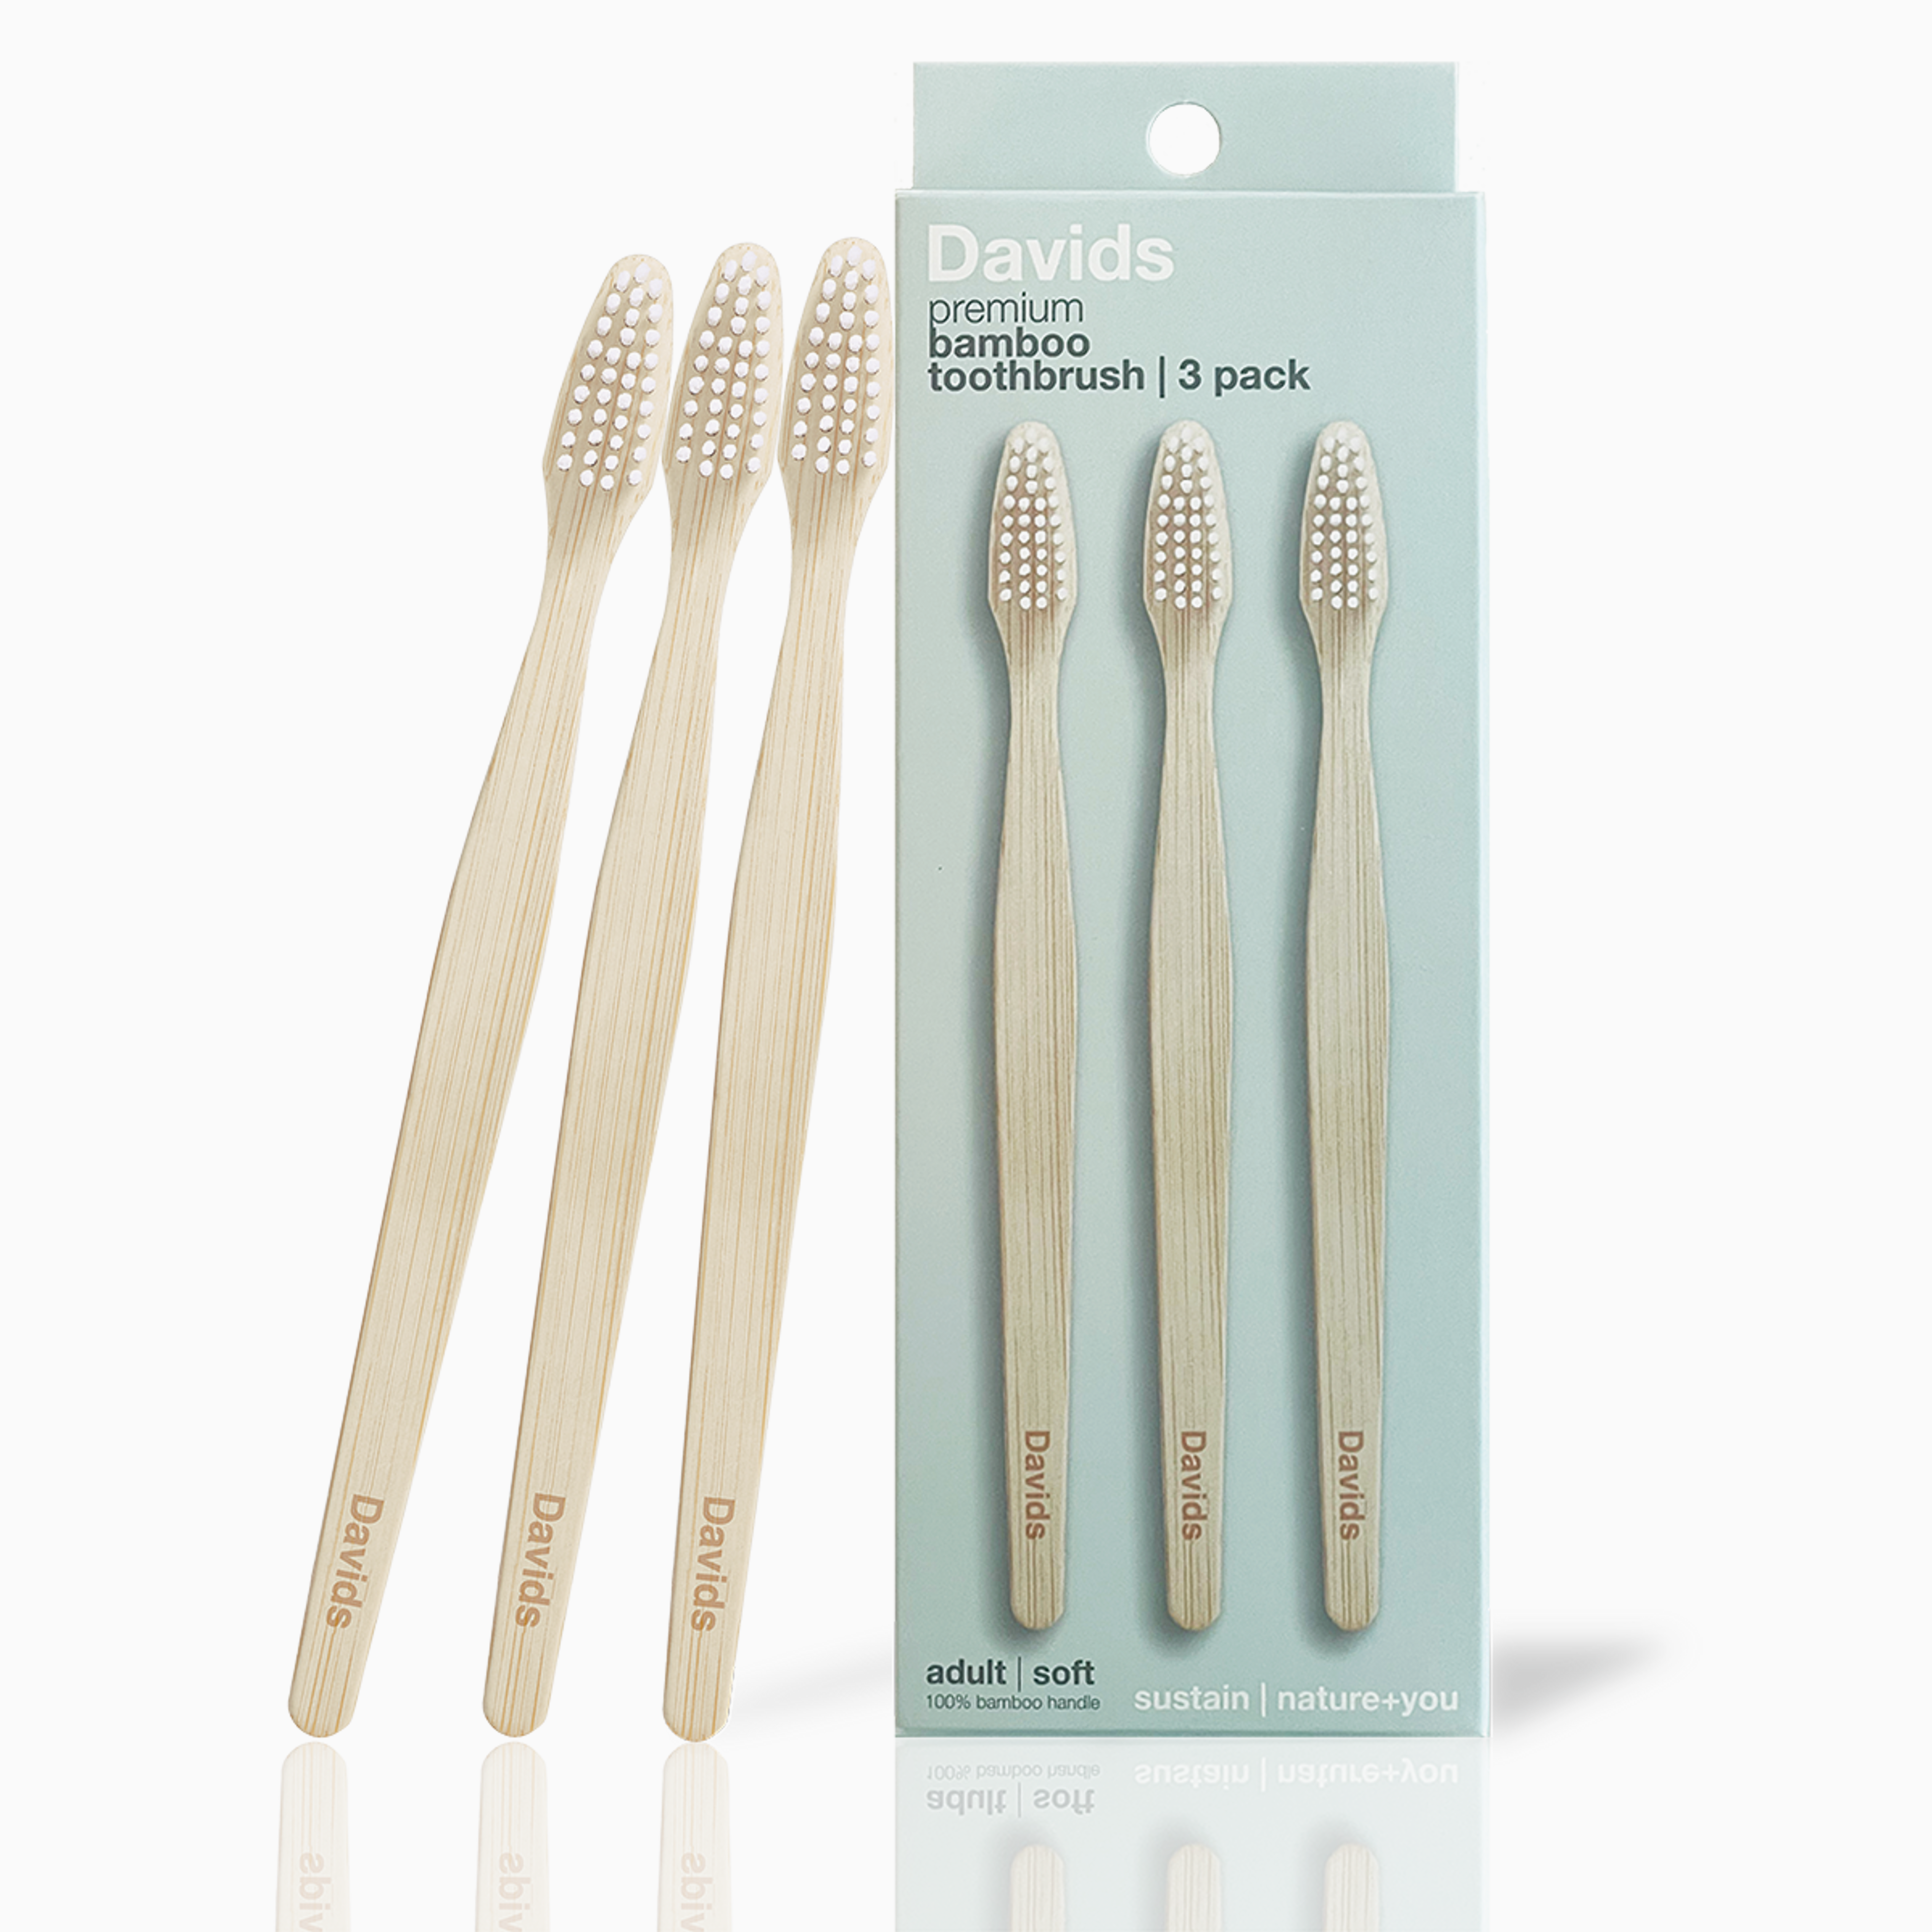 Davids premium bamboo toothbrush / adult soft / 3 pack